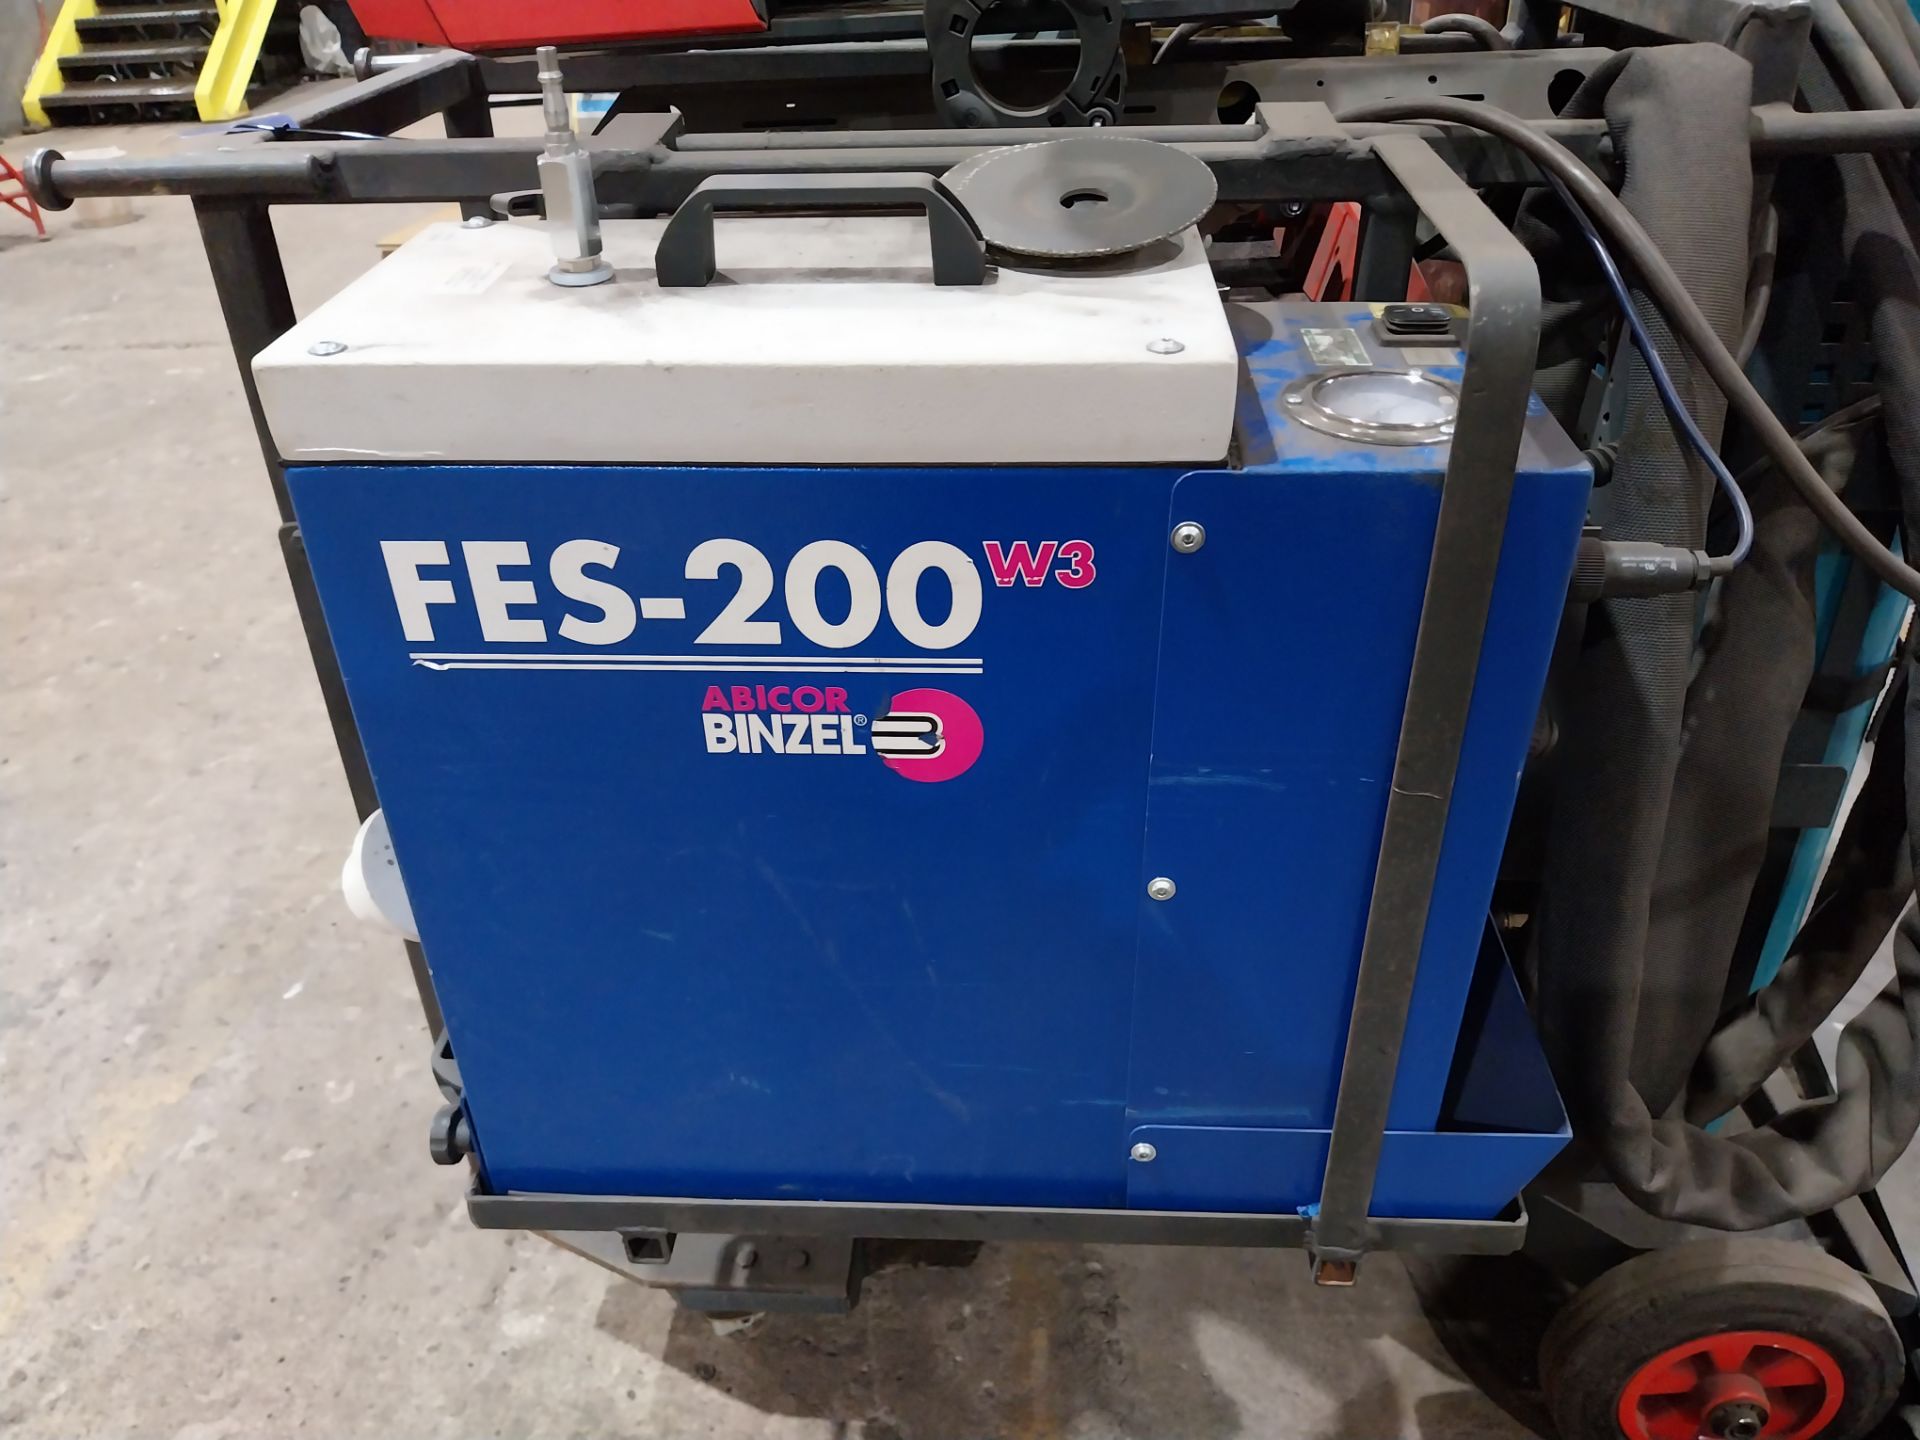 Fronius Transsteel 5000 Pulse mig welder with VR5000 wire feed, Binzel FES-200 W3 extractor ( - Image 8 of 9